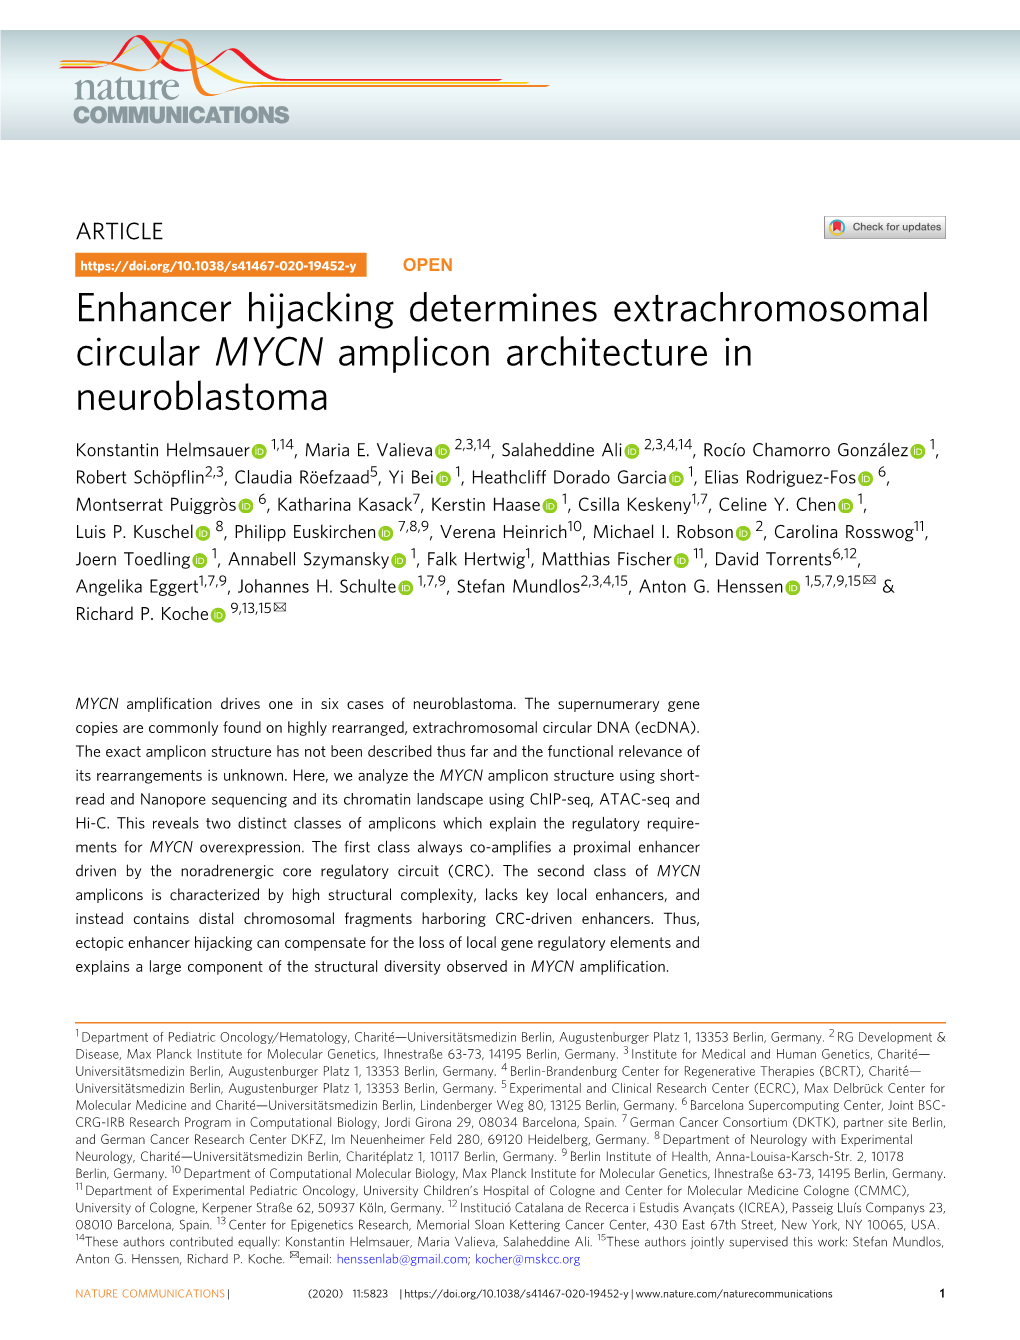 Enhancer Hijacking Determines Extrachromosomal Circular MYCN Amplicon Architecture in Neuroblastoma